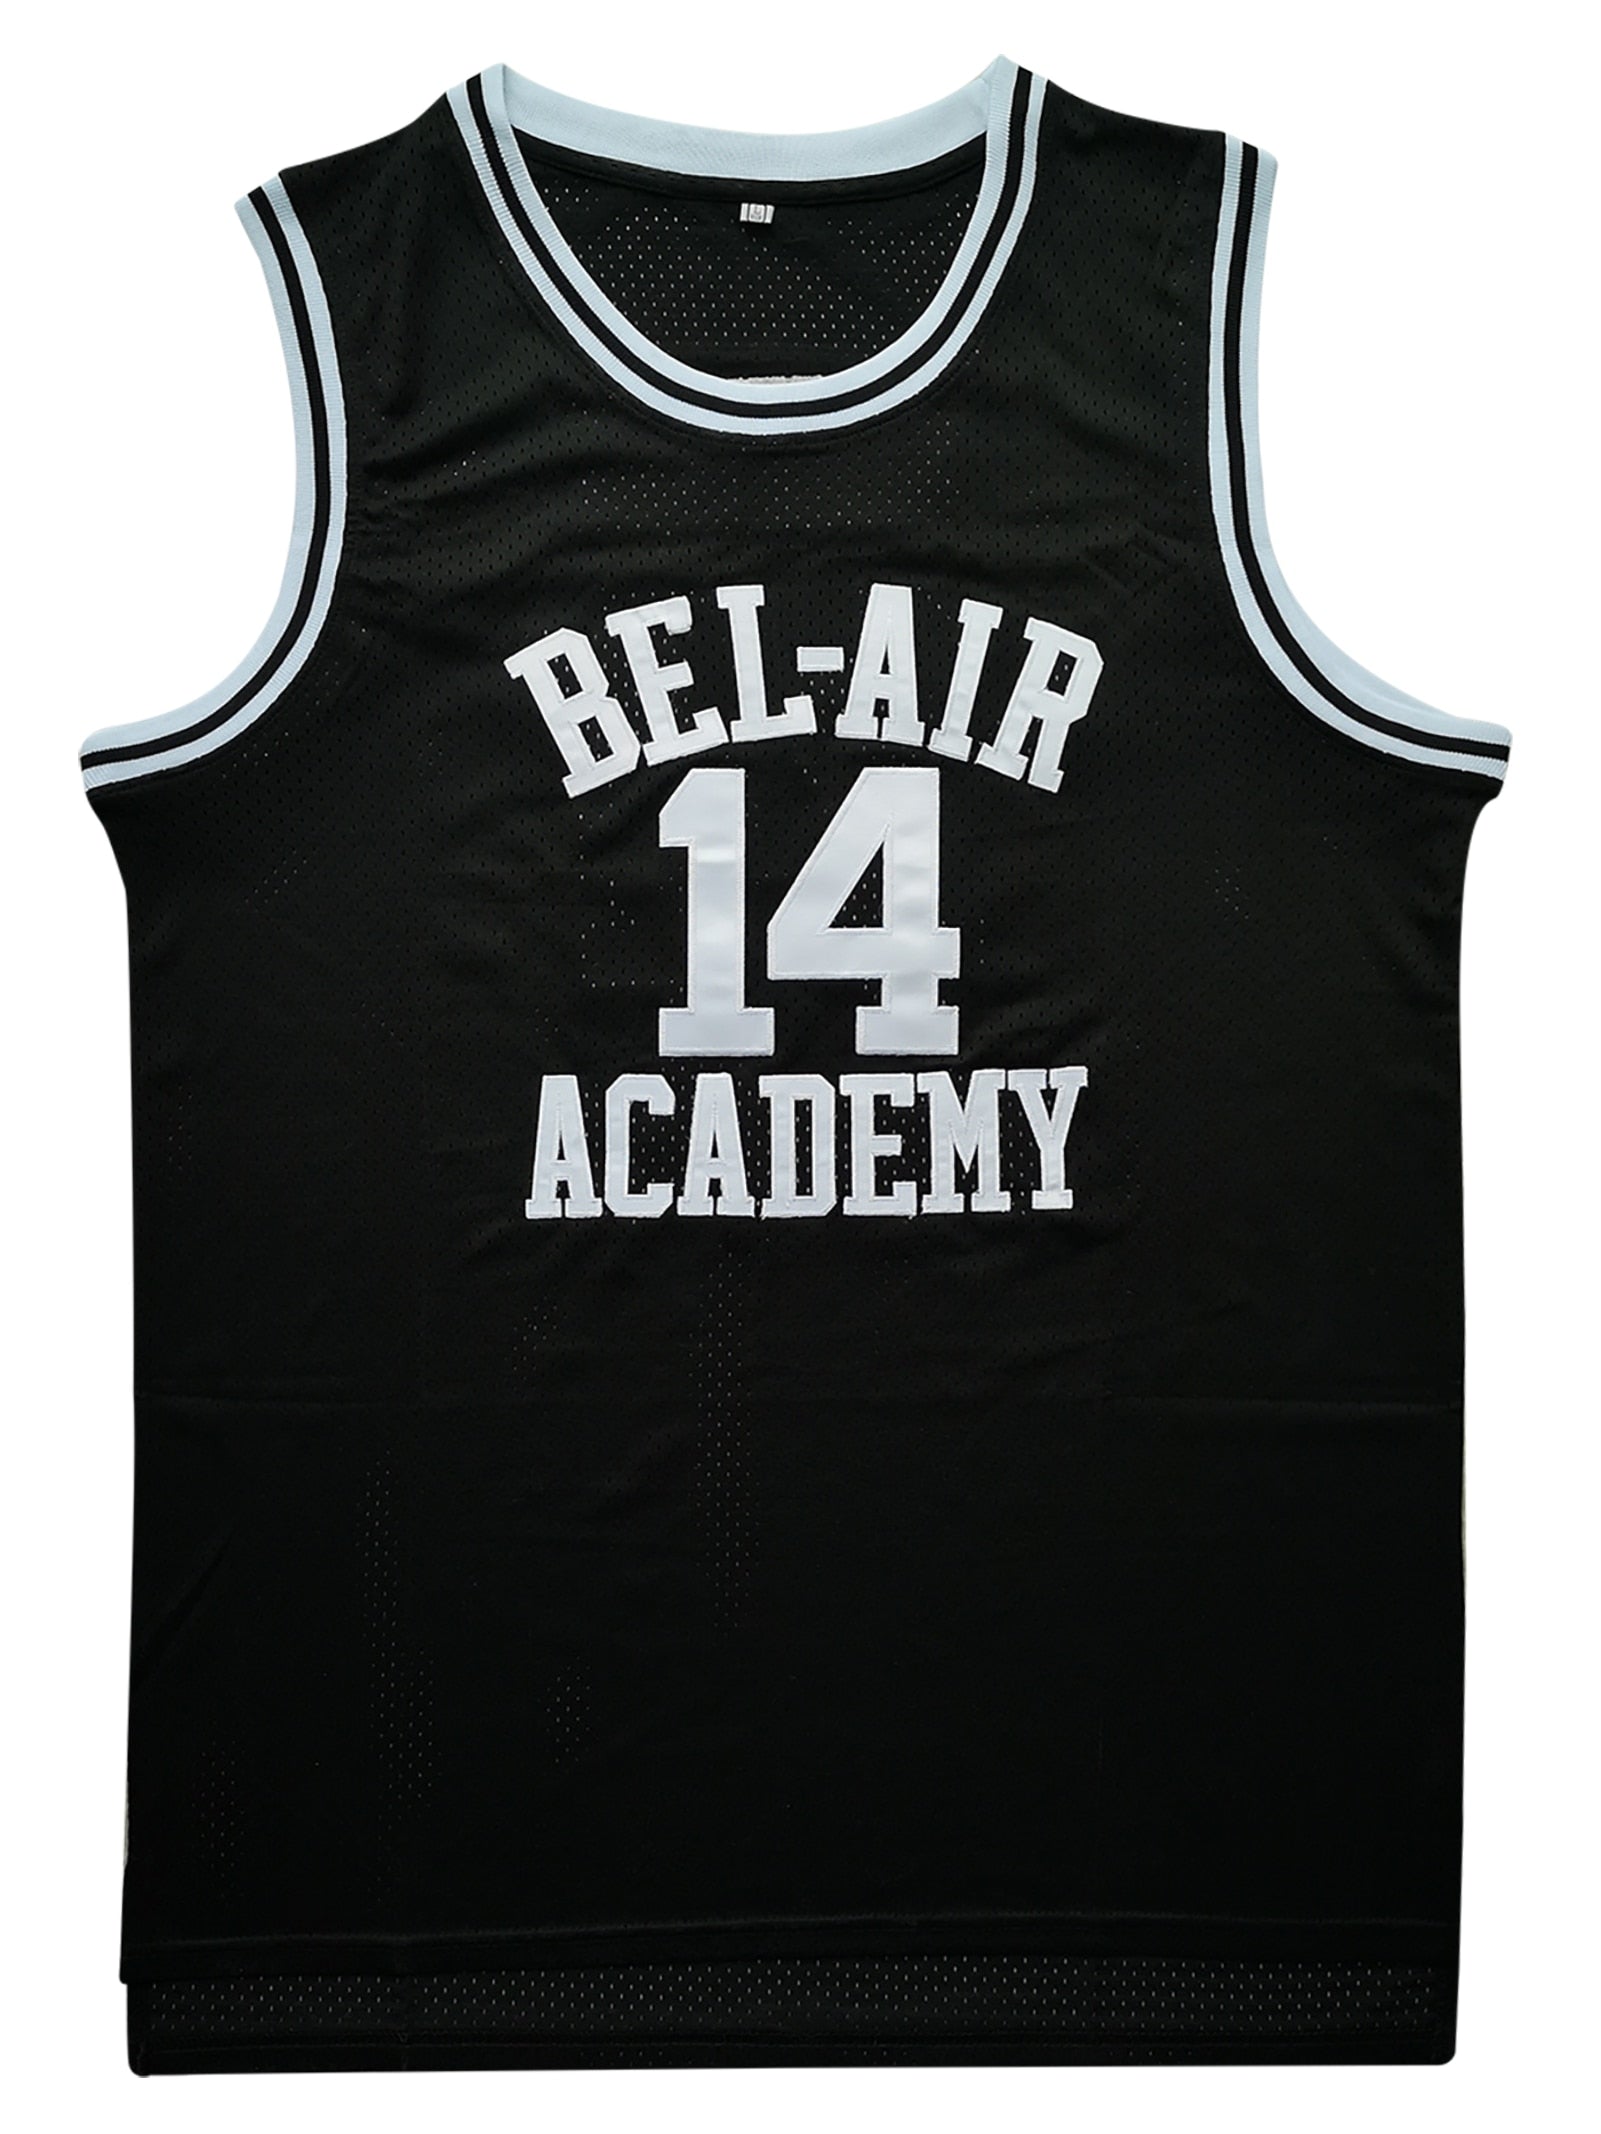 Will Smith Basketball JerseyBel Air Academy